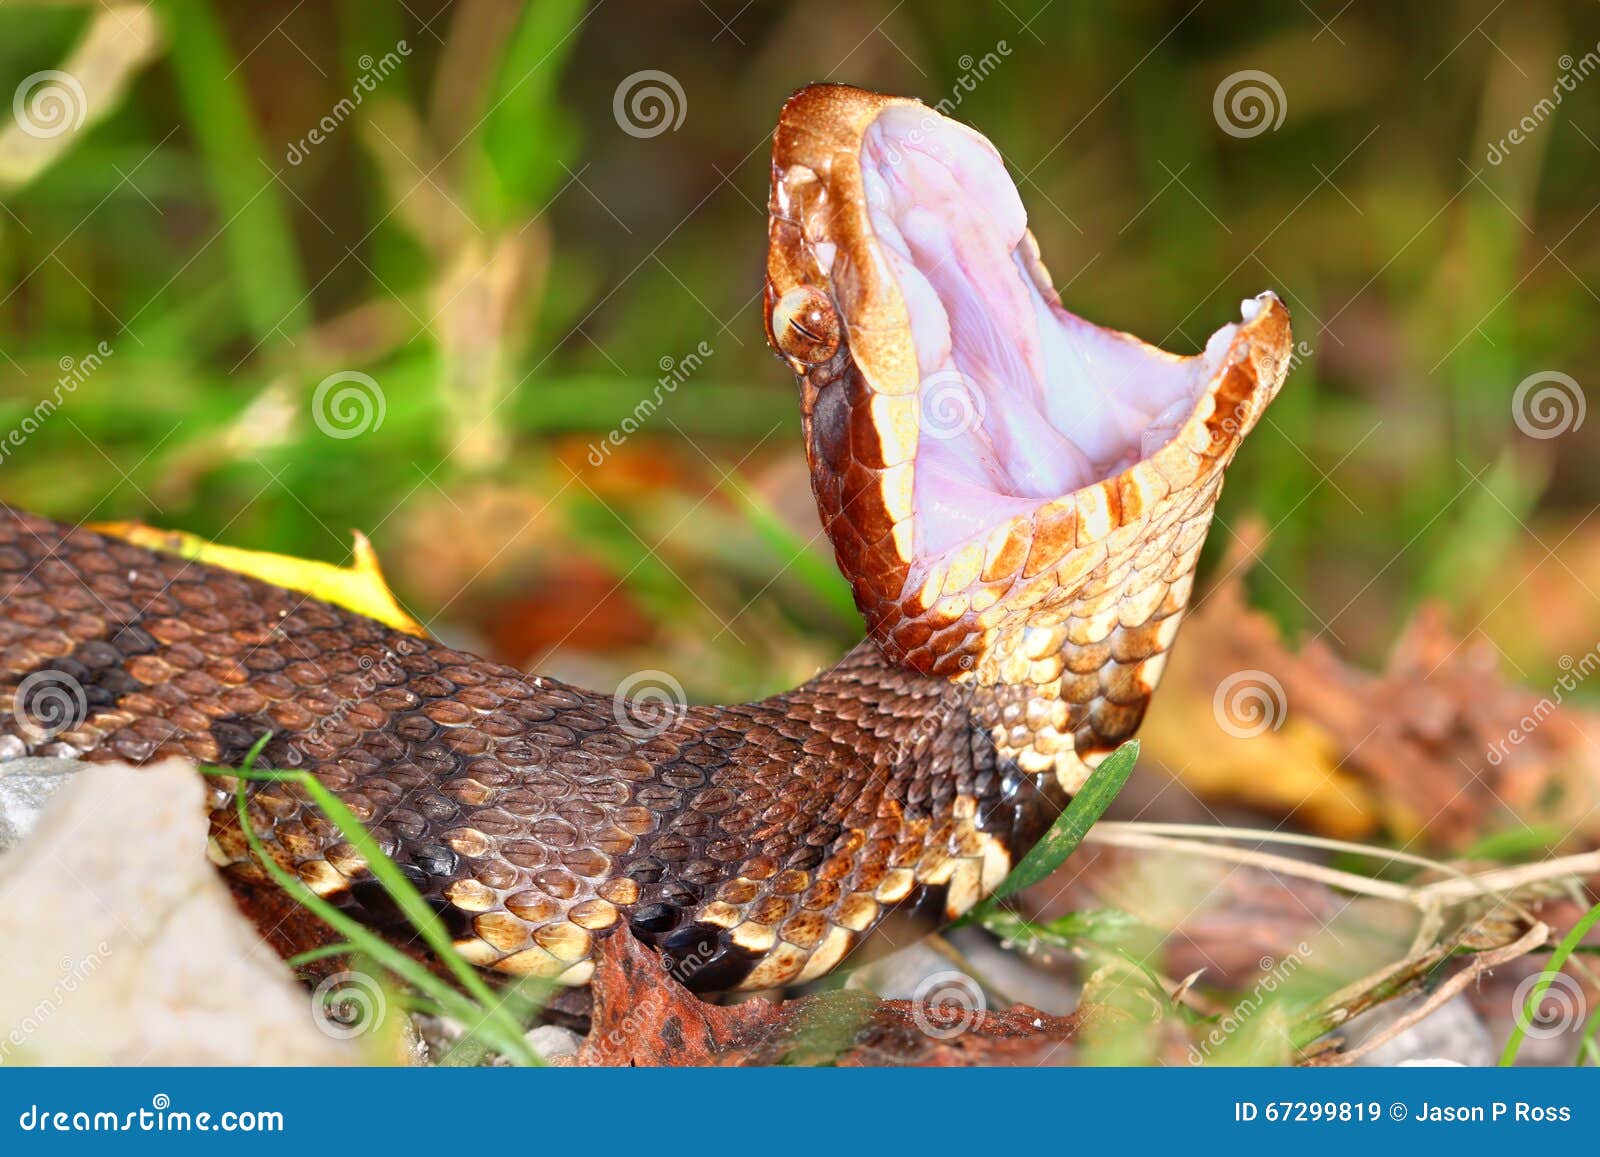 venomous cottonmouth snake